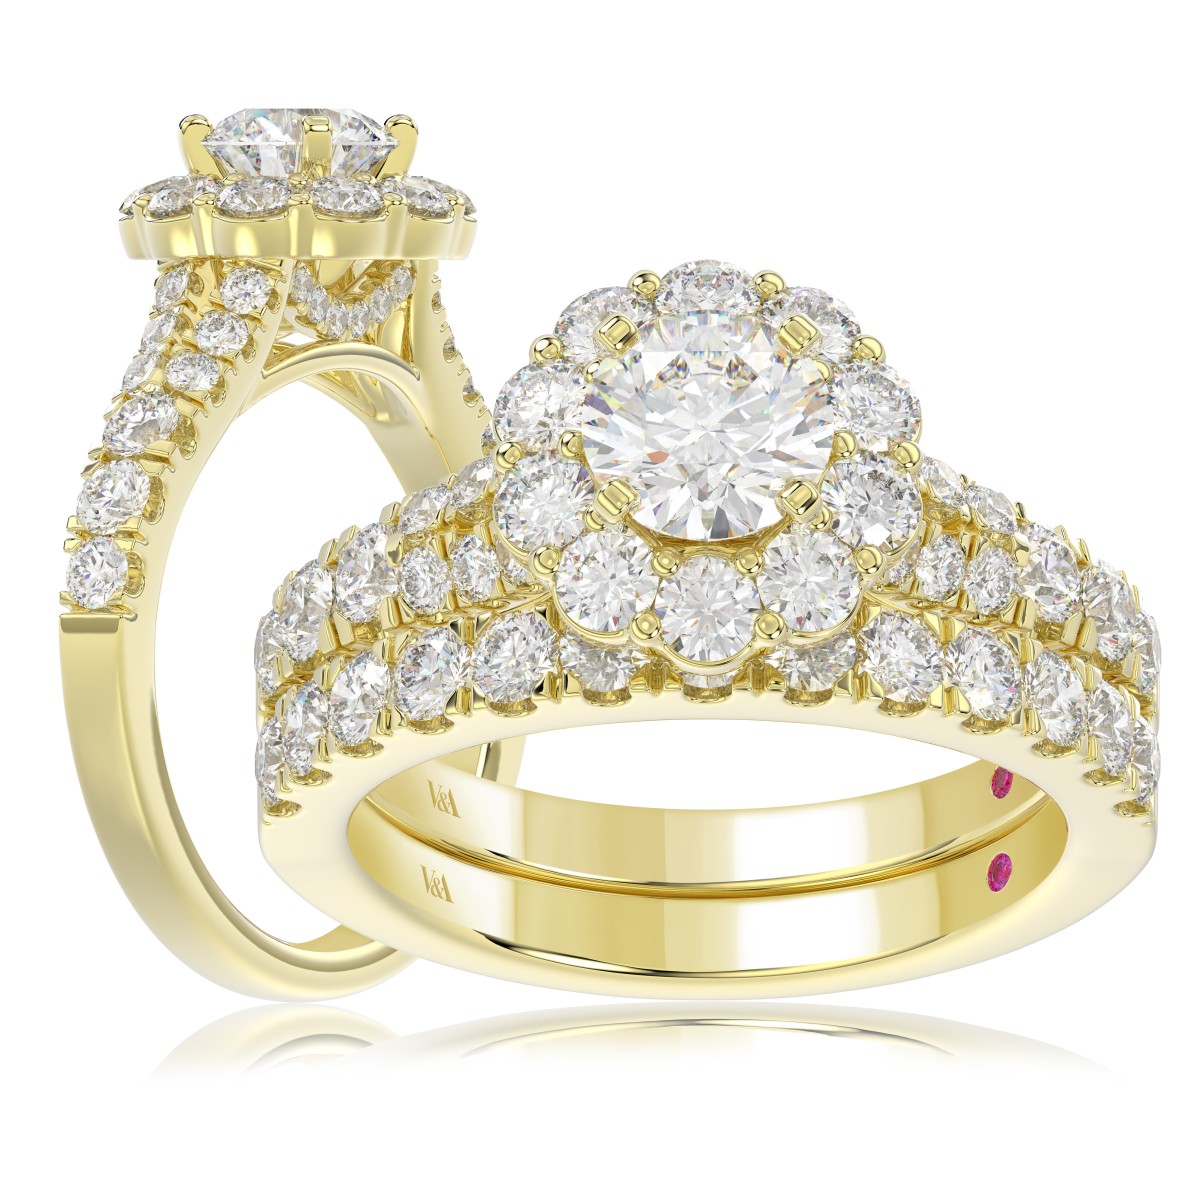 14K YELLOW GOLD 3 3/4CT ROUND DIAMOND LADIES BRIDAL SET(CENTER STONE MOUNT ROUND DIAMOND 1CT)